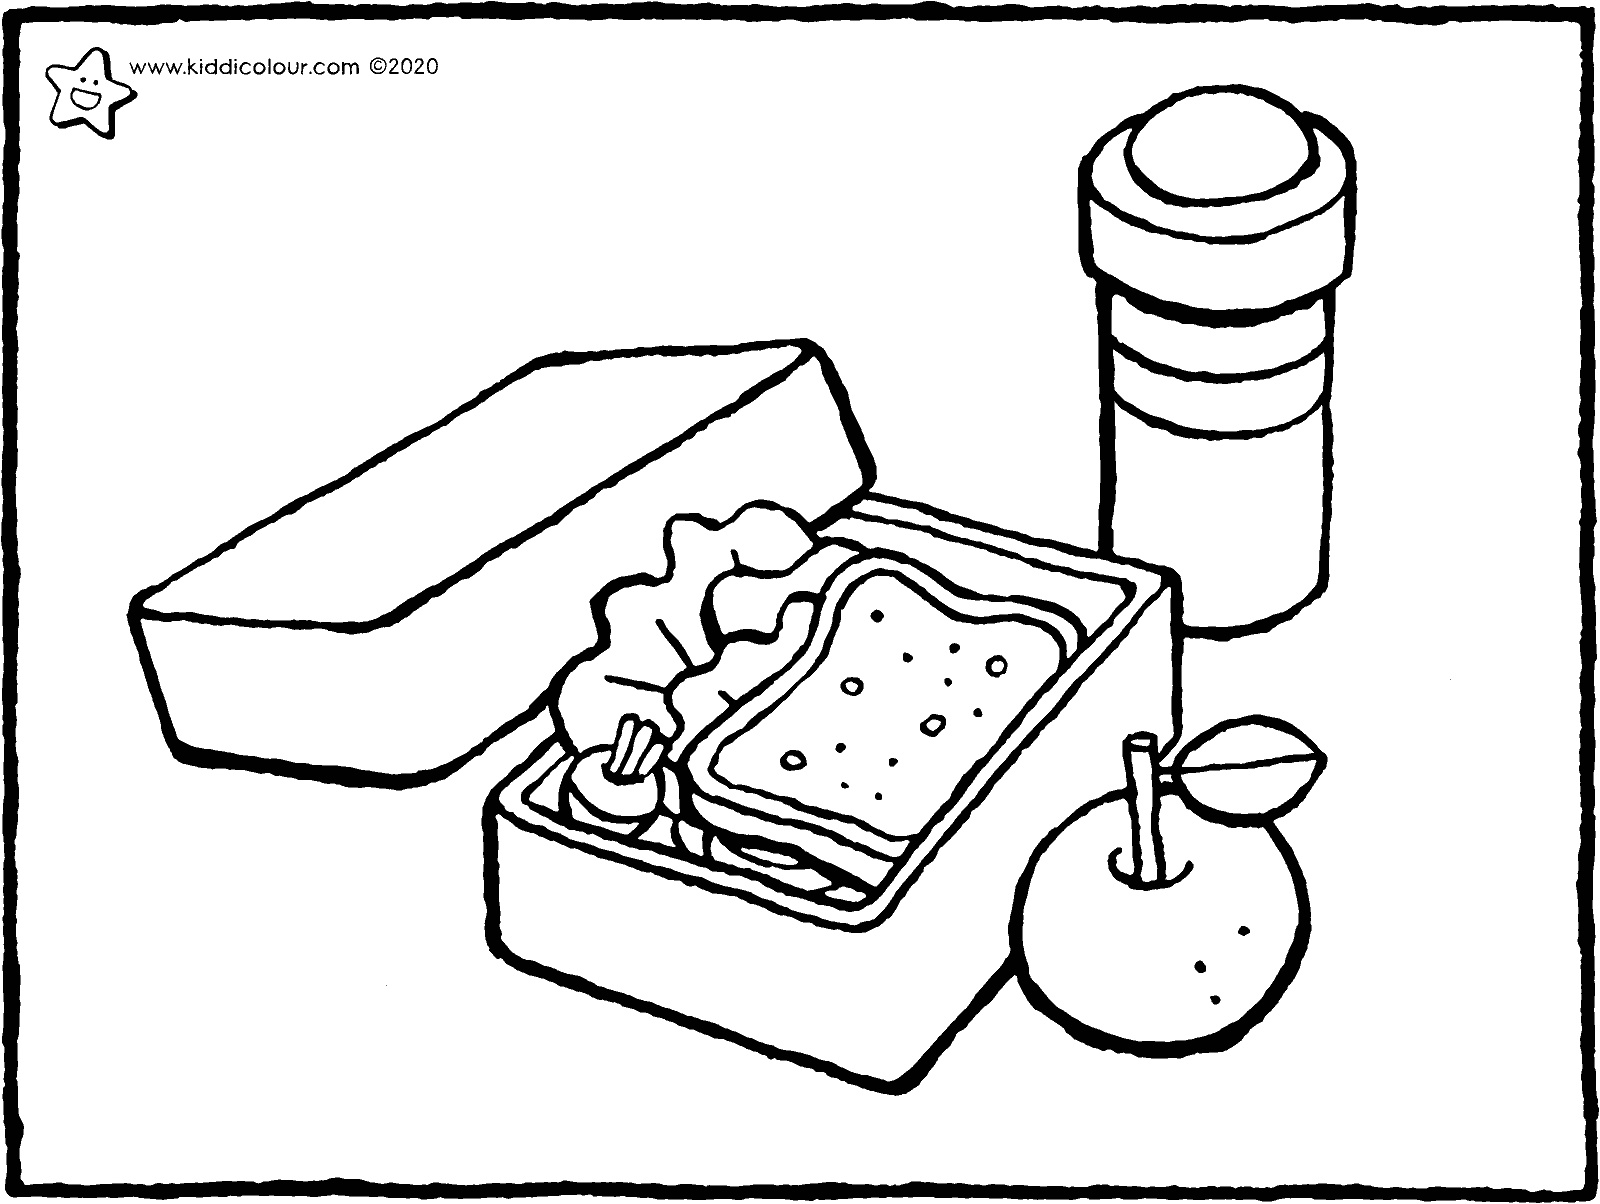 lunch box - kiddicolour